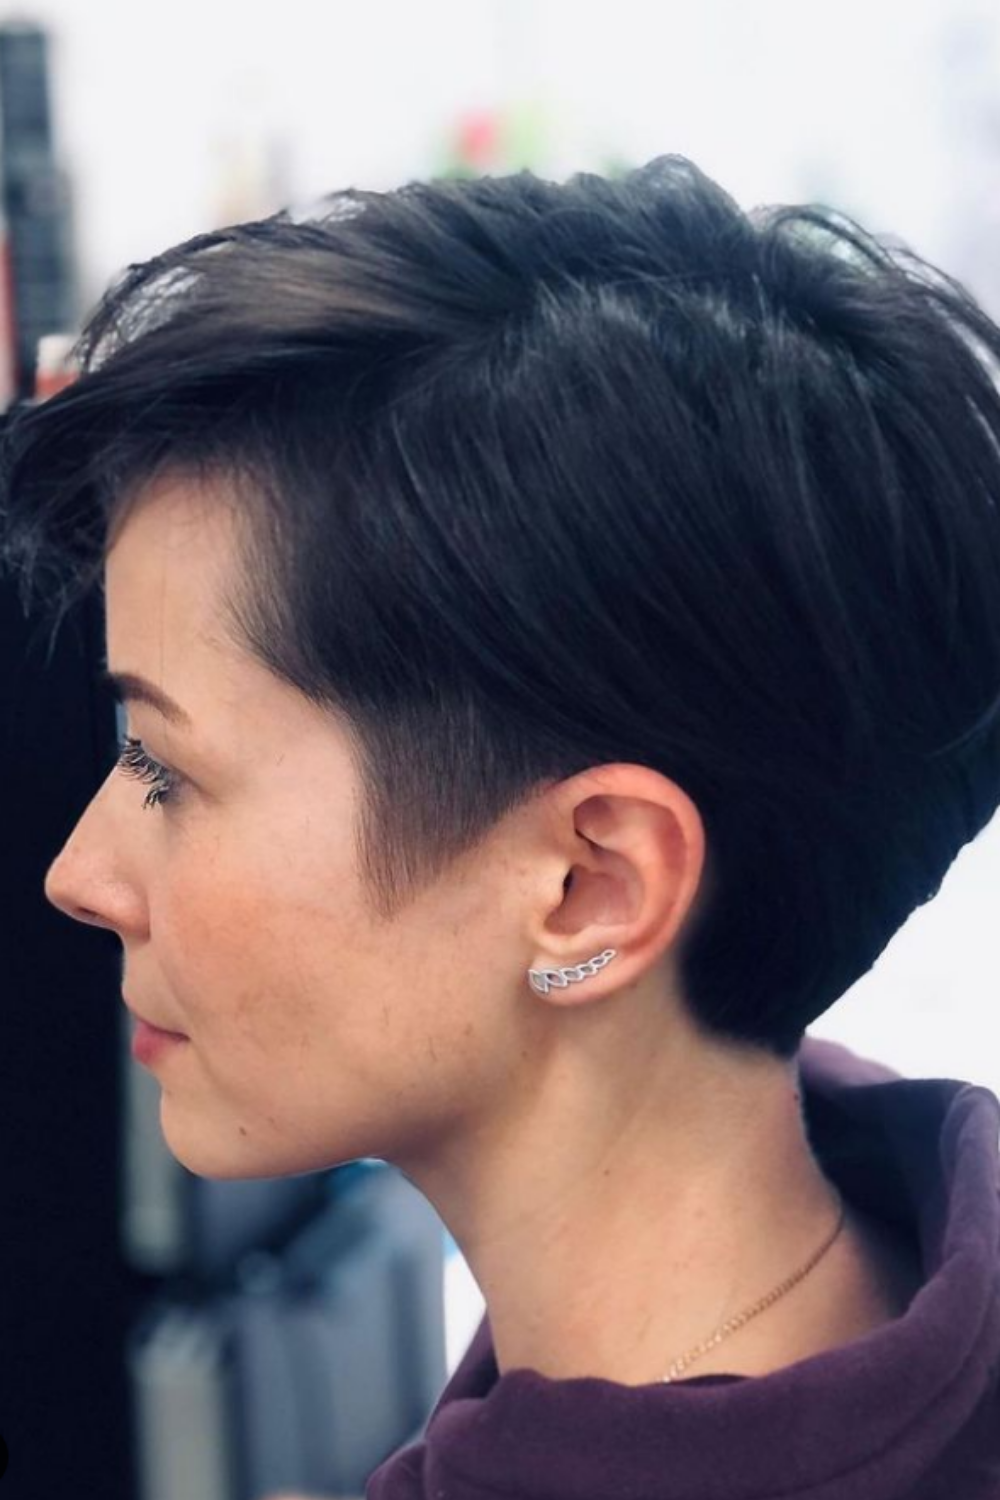 Pixie haircuts for women | Ideas That’ll Make You Want Short Hair